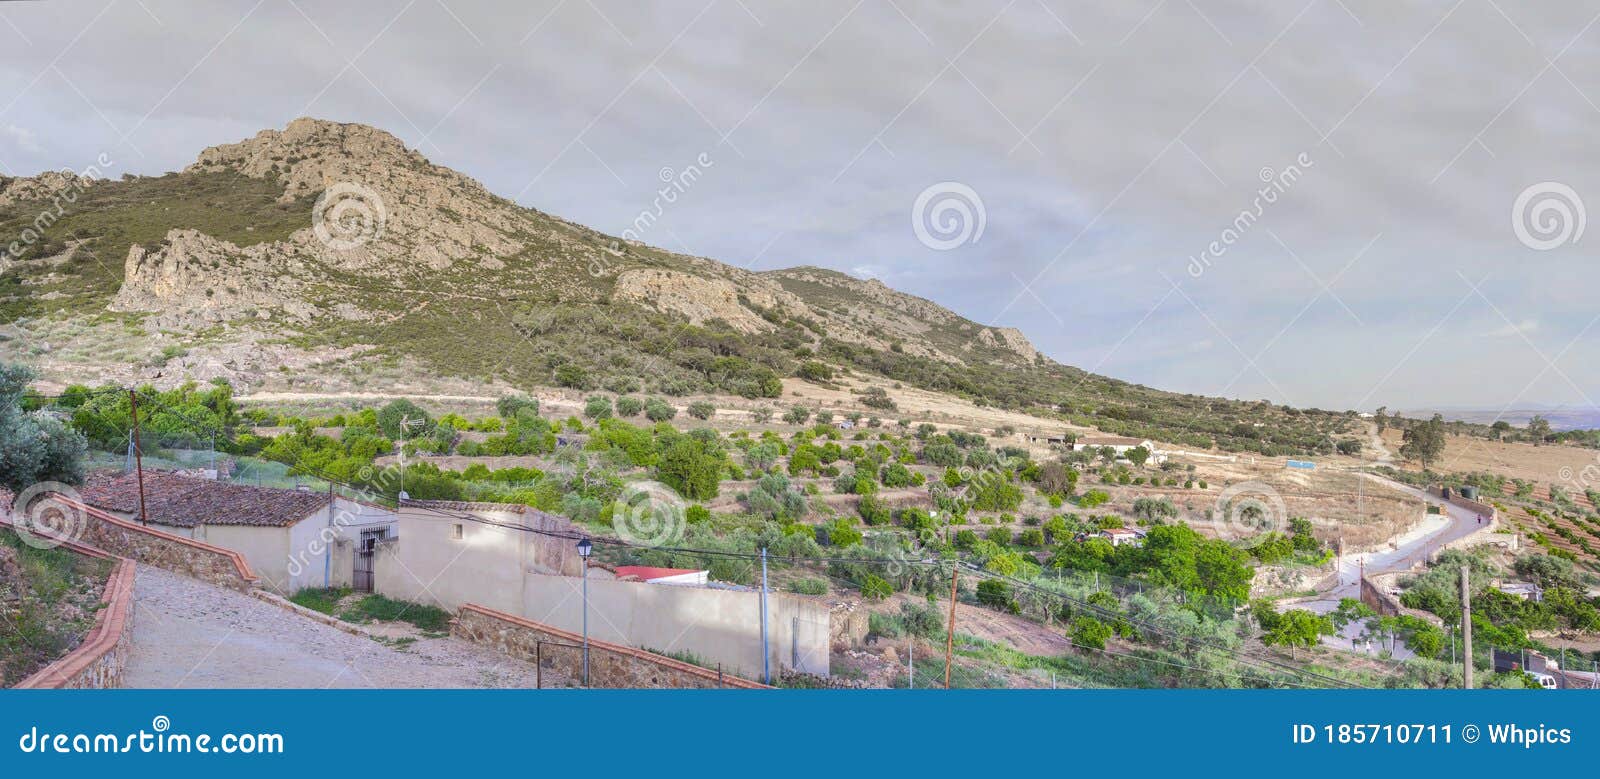 green belt with vegetable gardens along the sierra grande hillside, hornachos, extremadura, spain